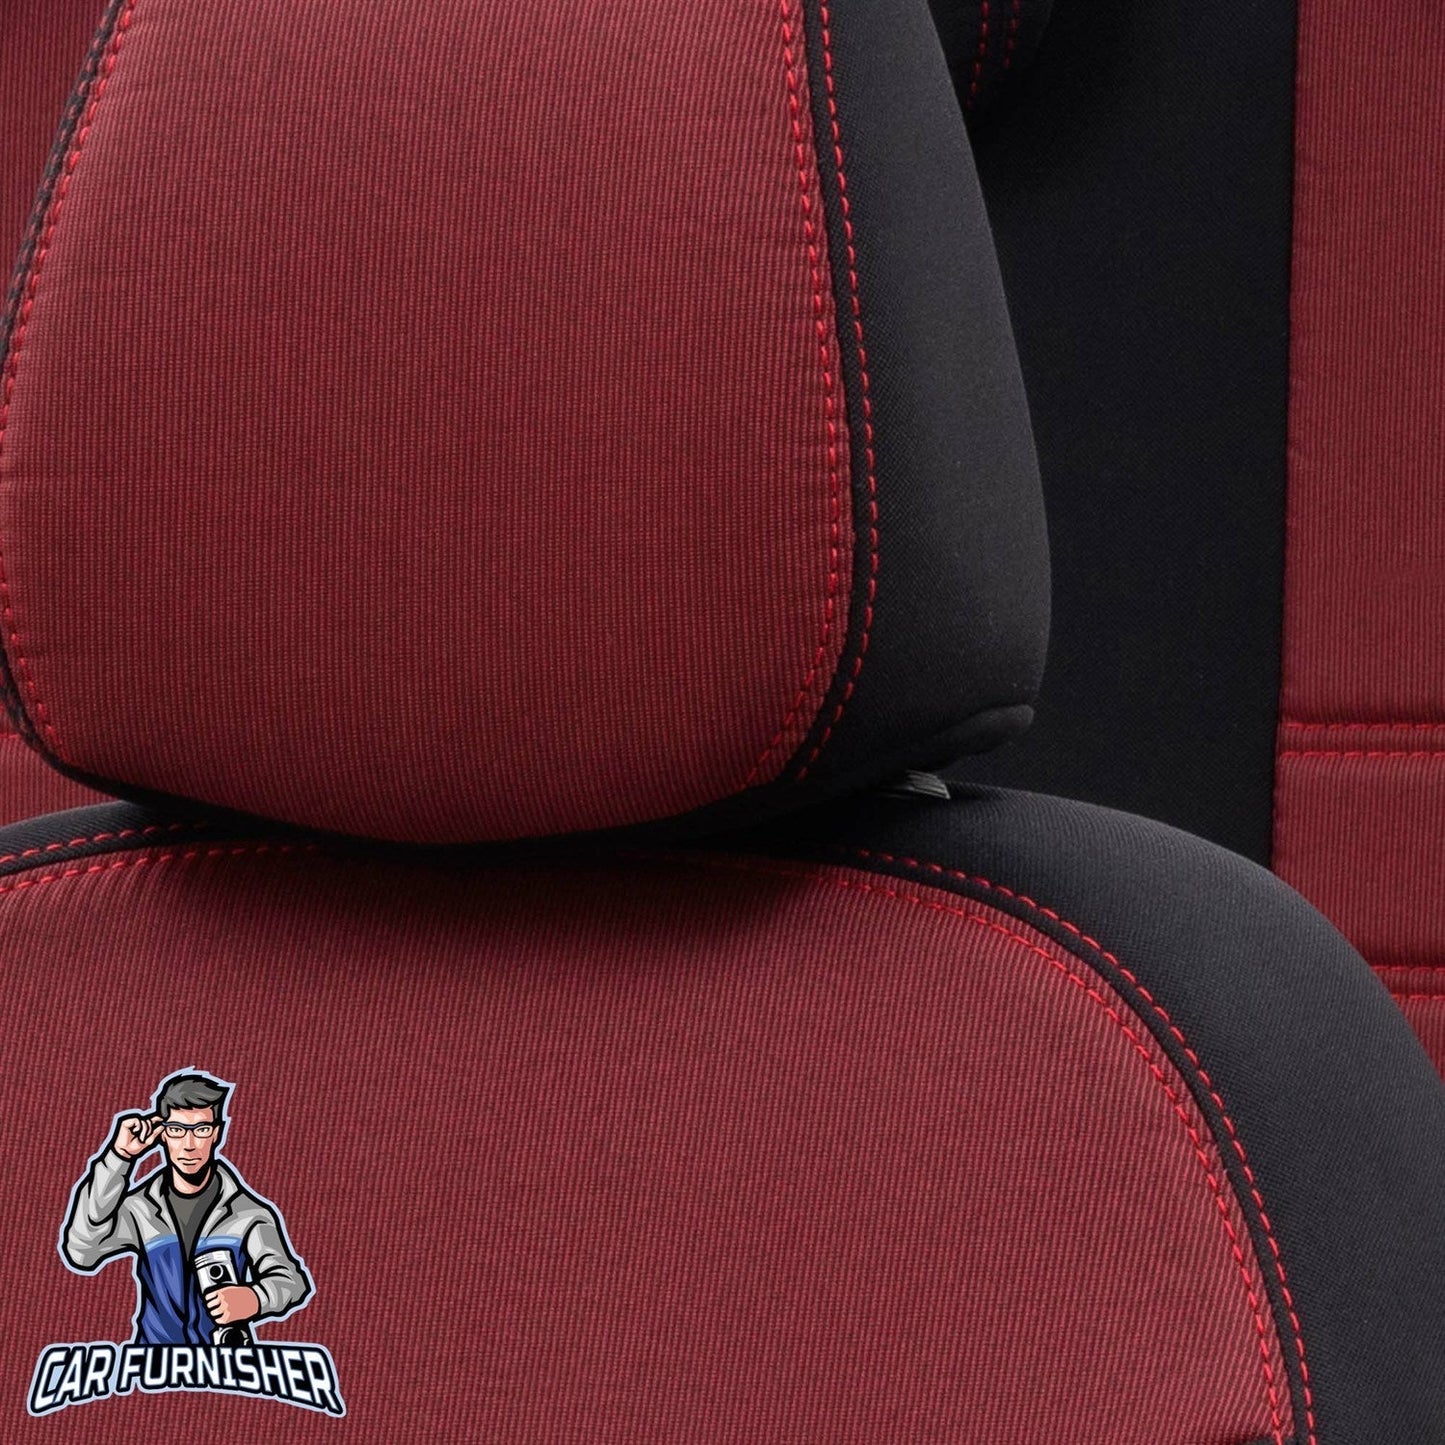 Daewoo Tacuma Seat Covers Original Jacquard Design Red Jacquard Fabric